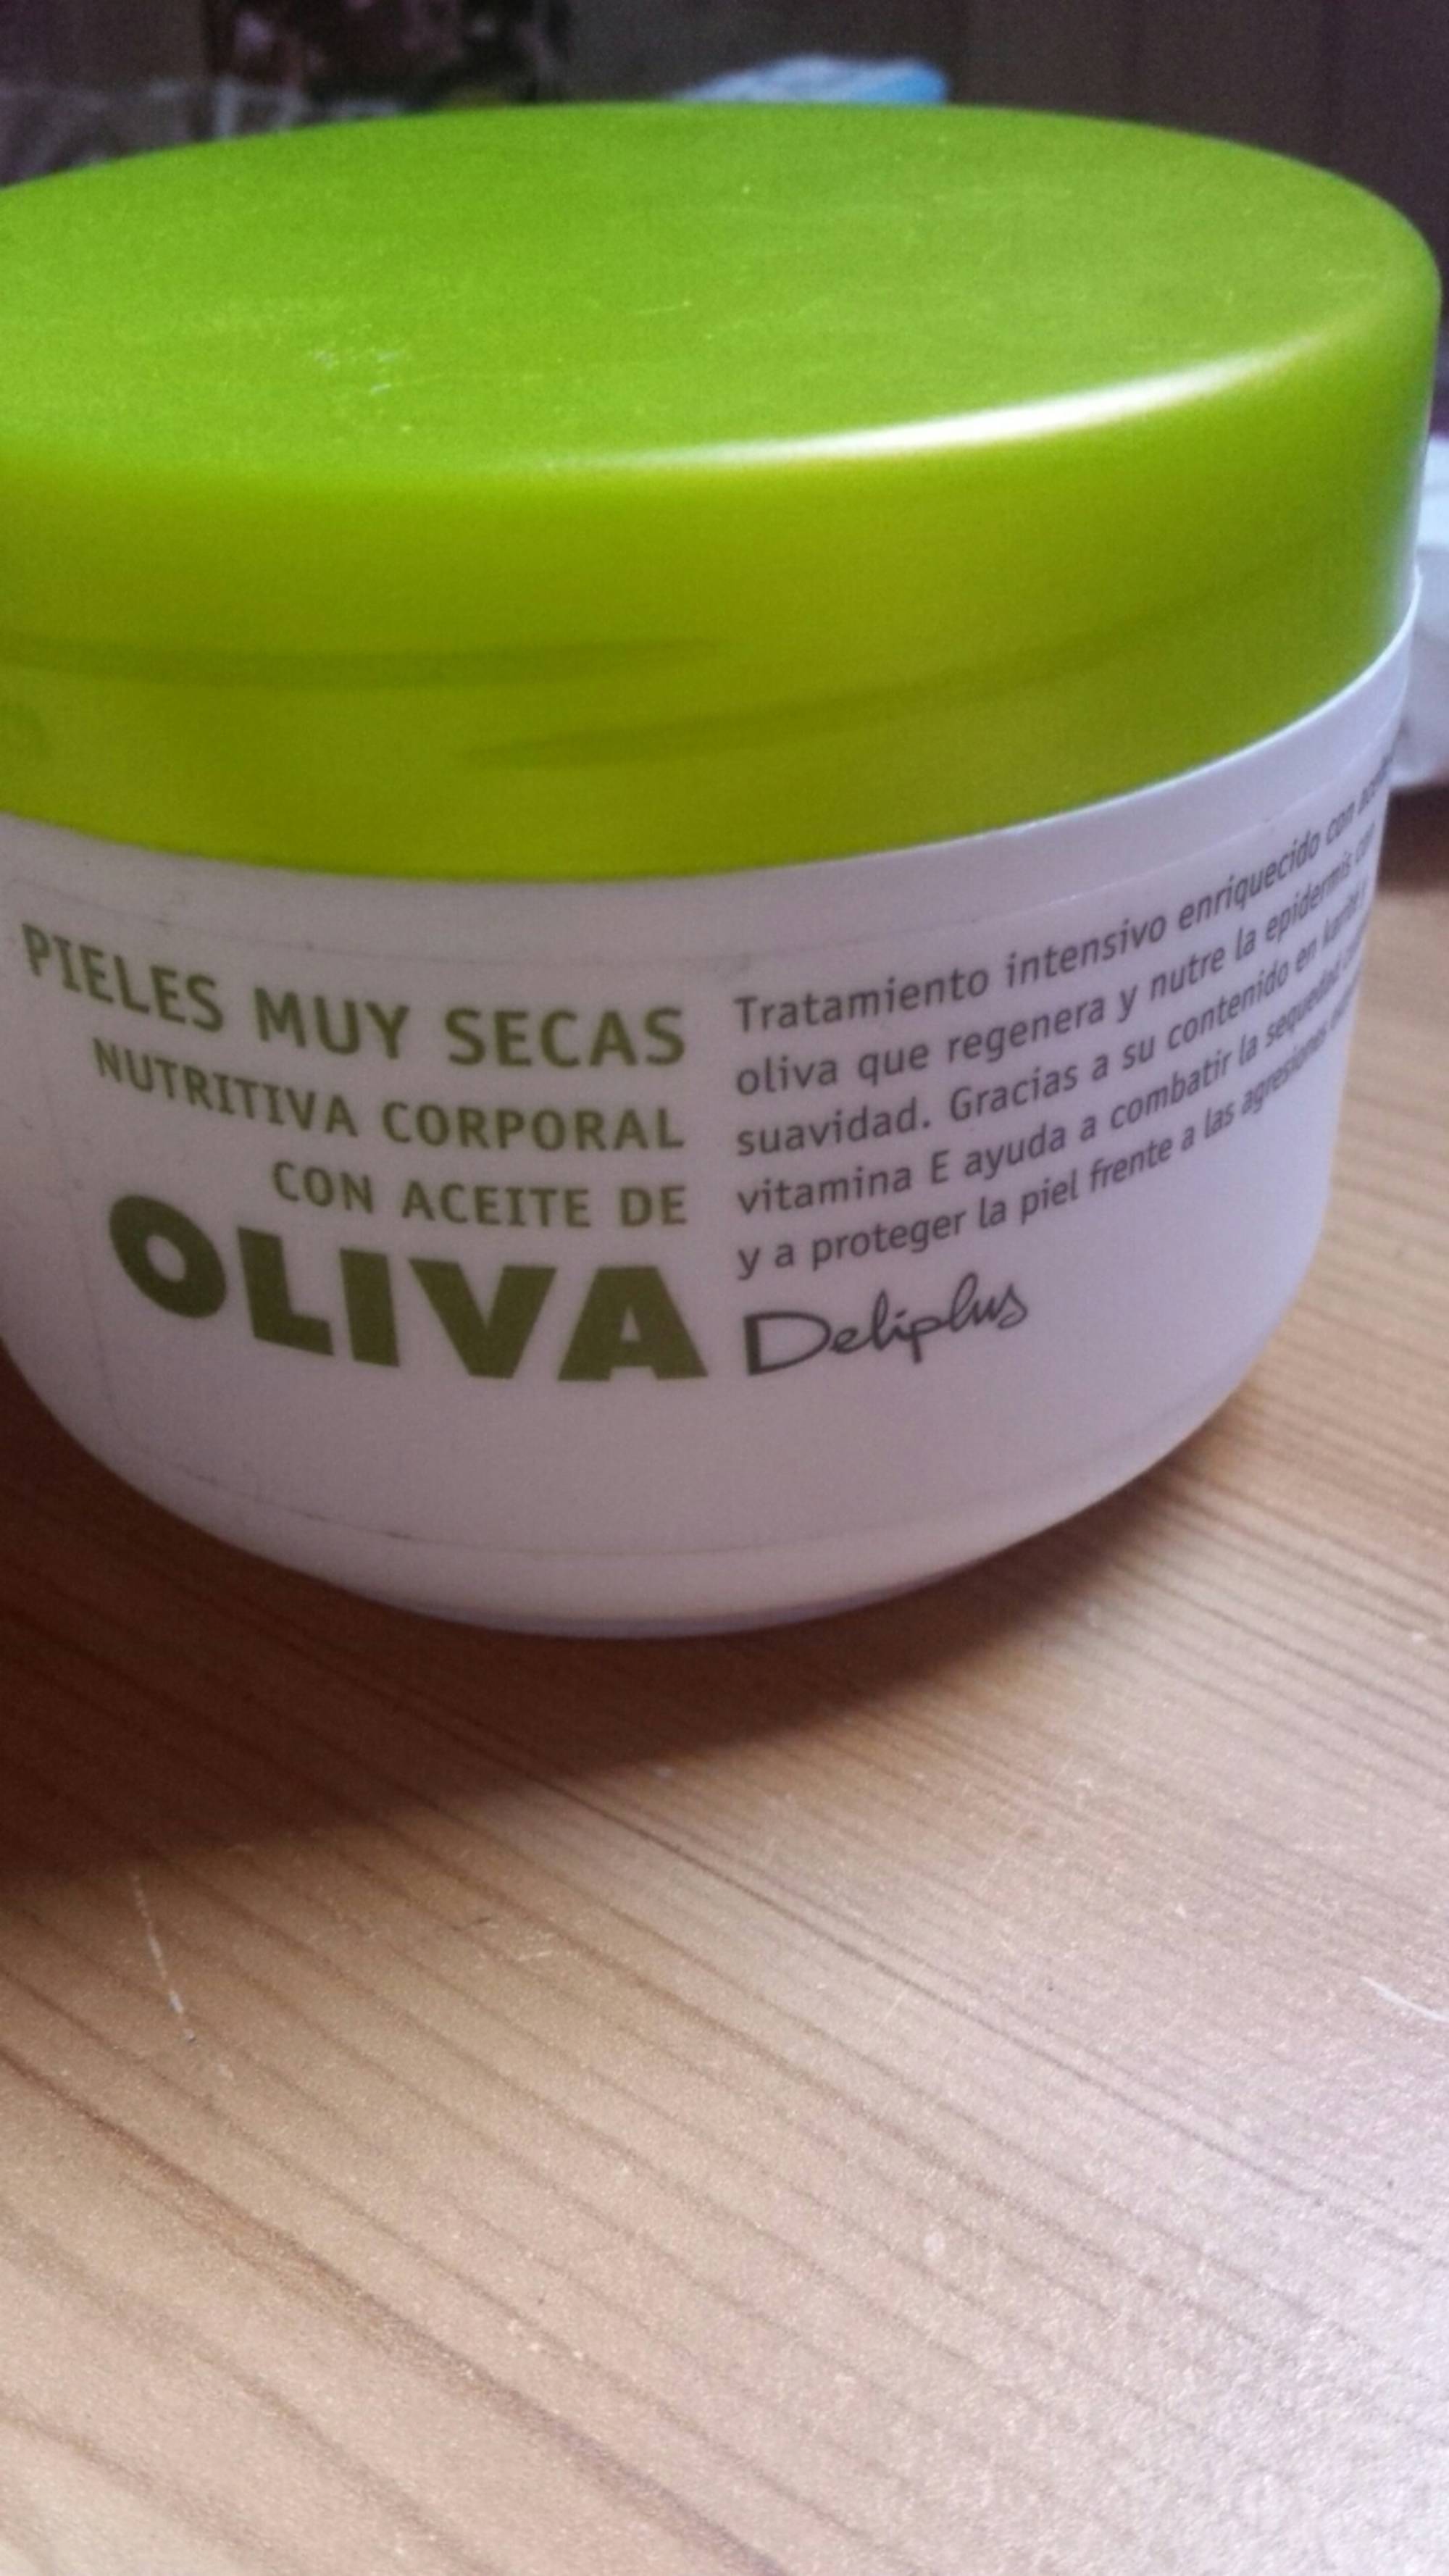 DELIPLUS - Pieles muy seca - Nutritiva corporal con aceite de oliva